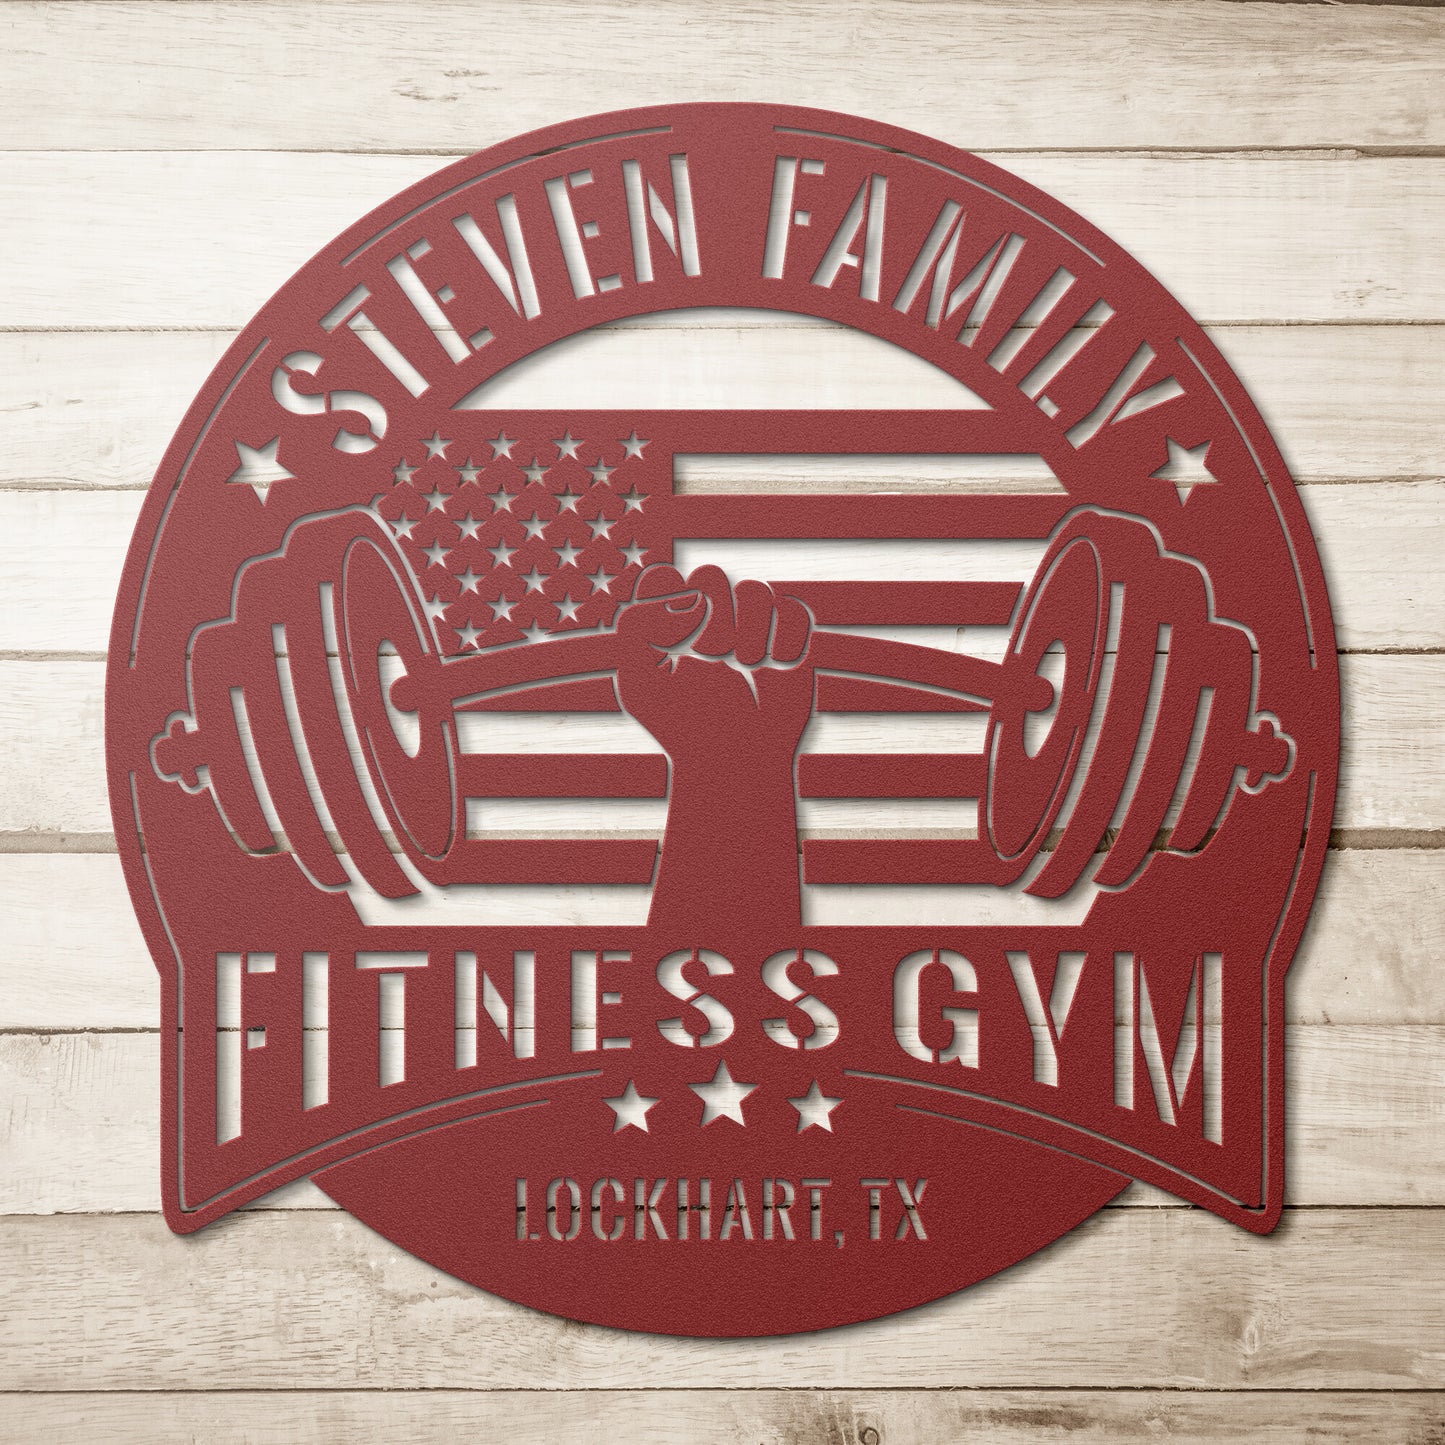 Benutzerdefiniertes USA Family Fitness Studio Gym Schild